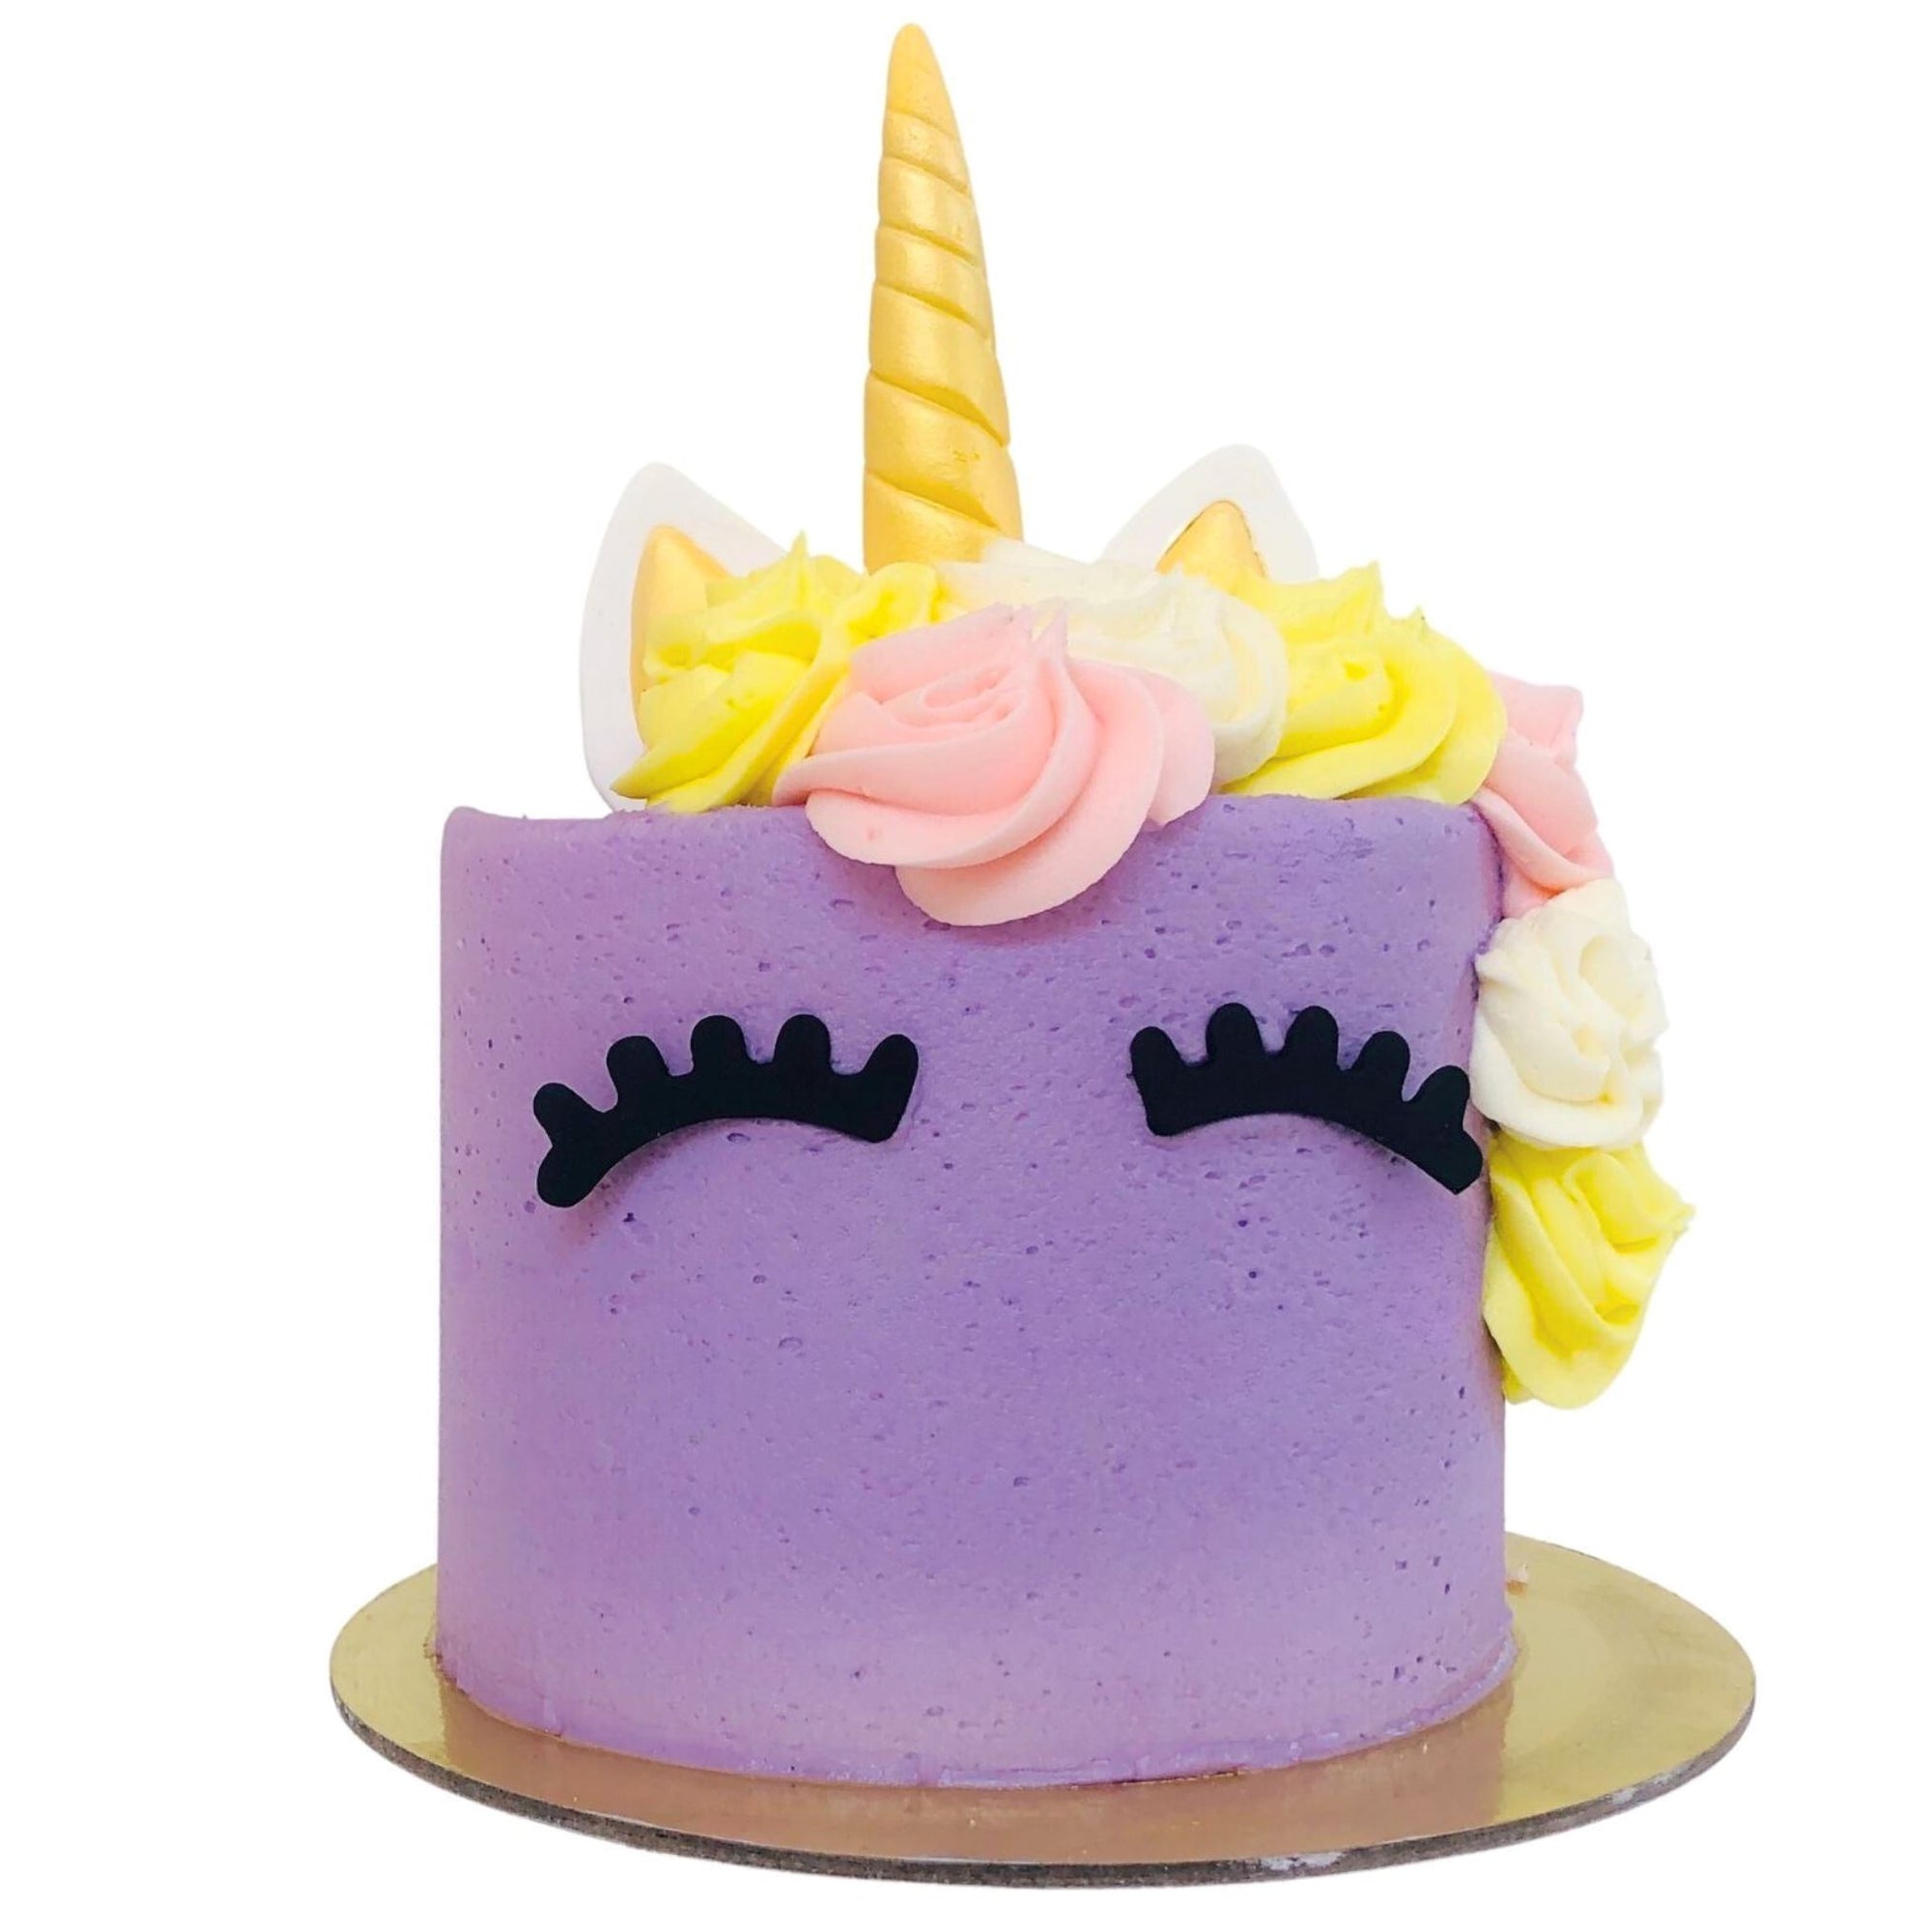 The Unicorn Cake in Purple Cakes The Cupcake Queens 